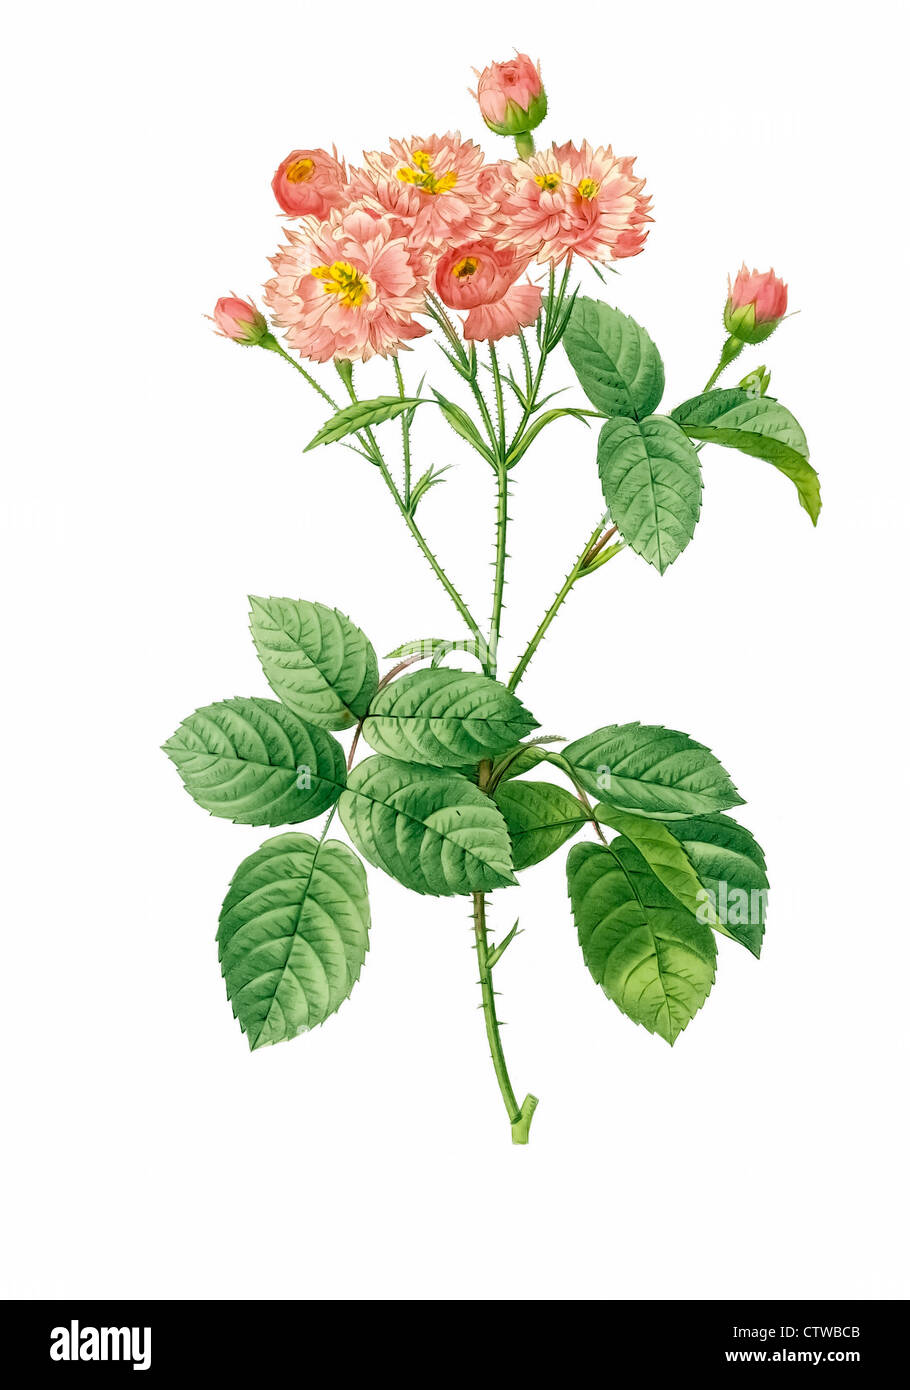 illustration of rosa centifolia caryphyllea, carnation rose - variation of provence rose or cabbage rose or Rose de Mai Stock Photo